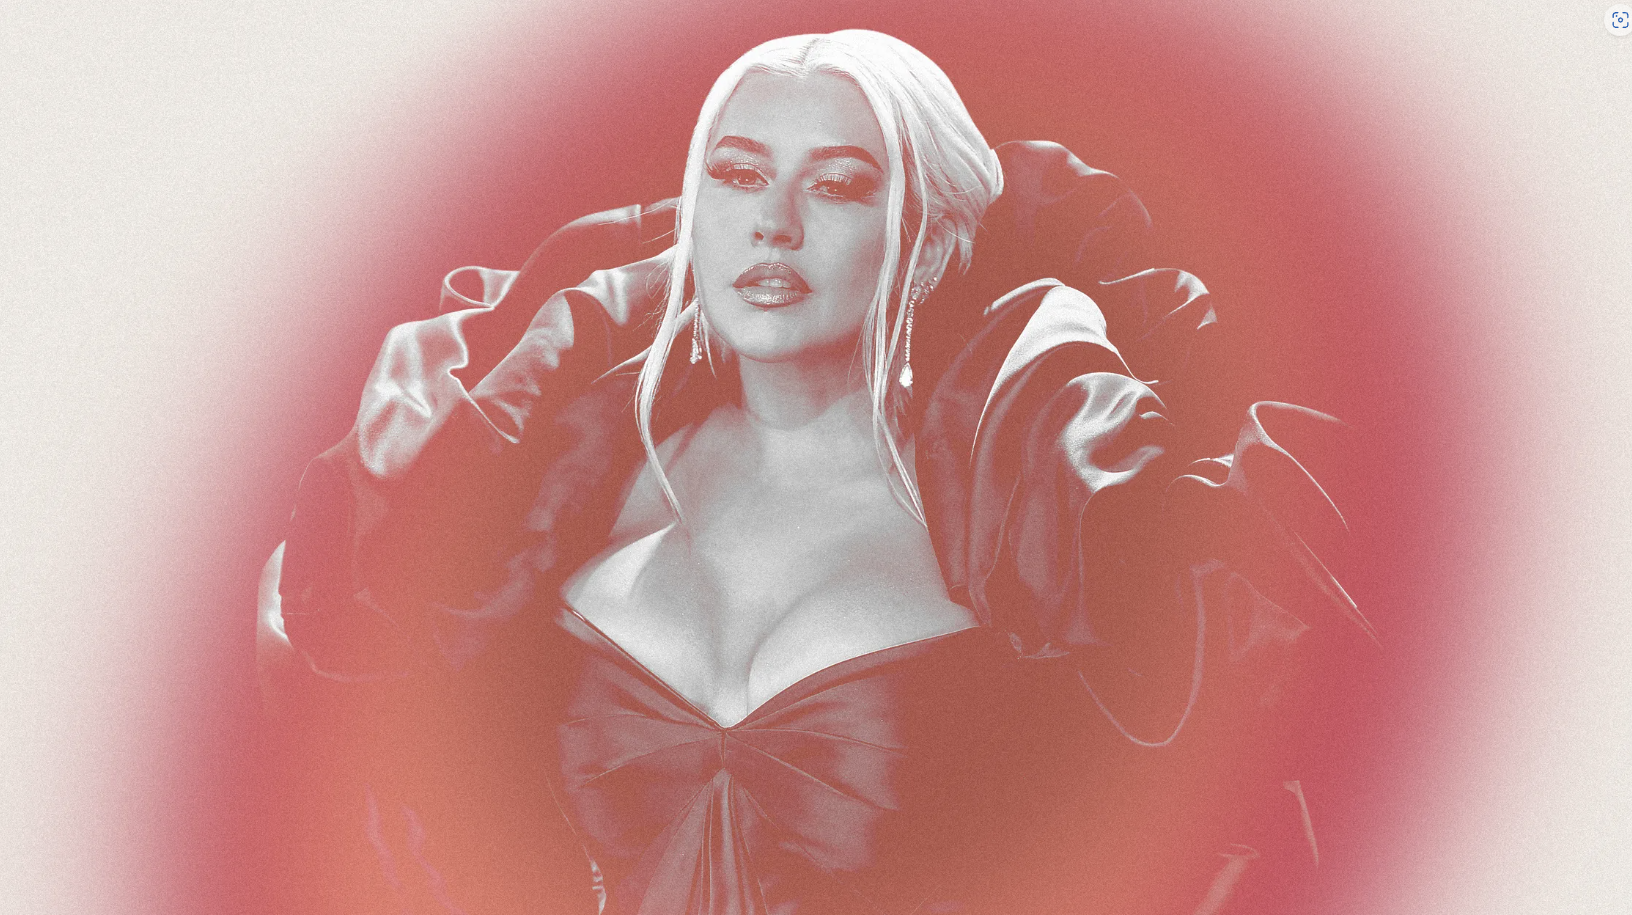 Image of Christina Aguilera posing